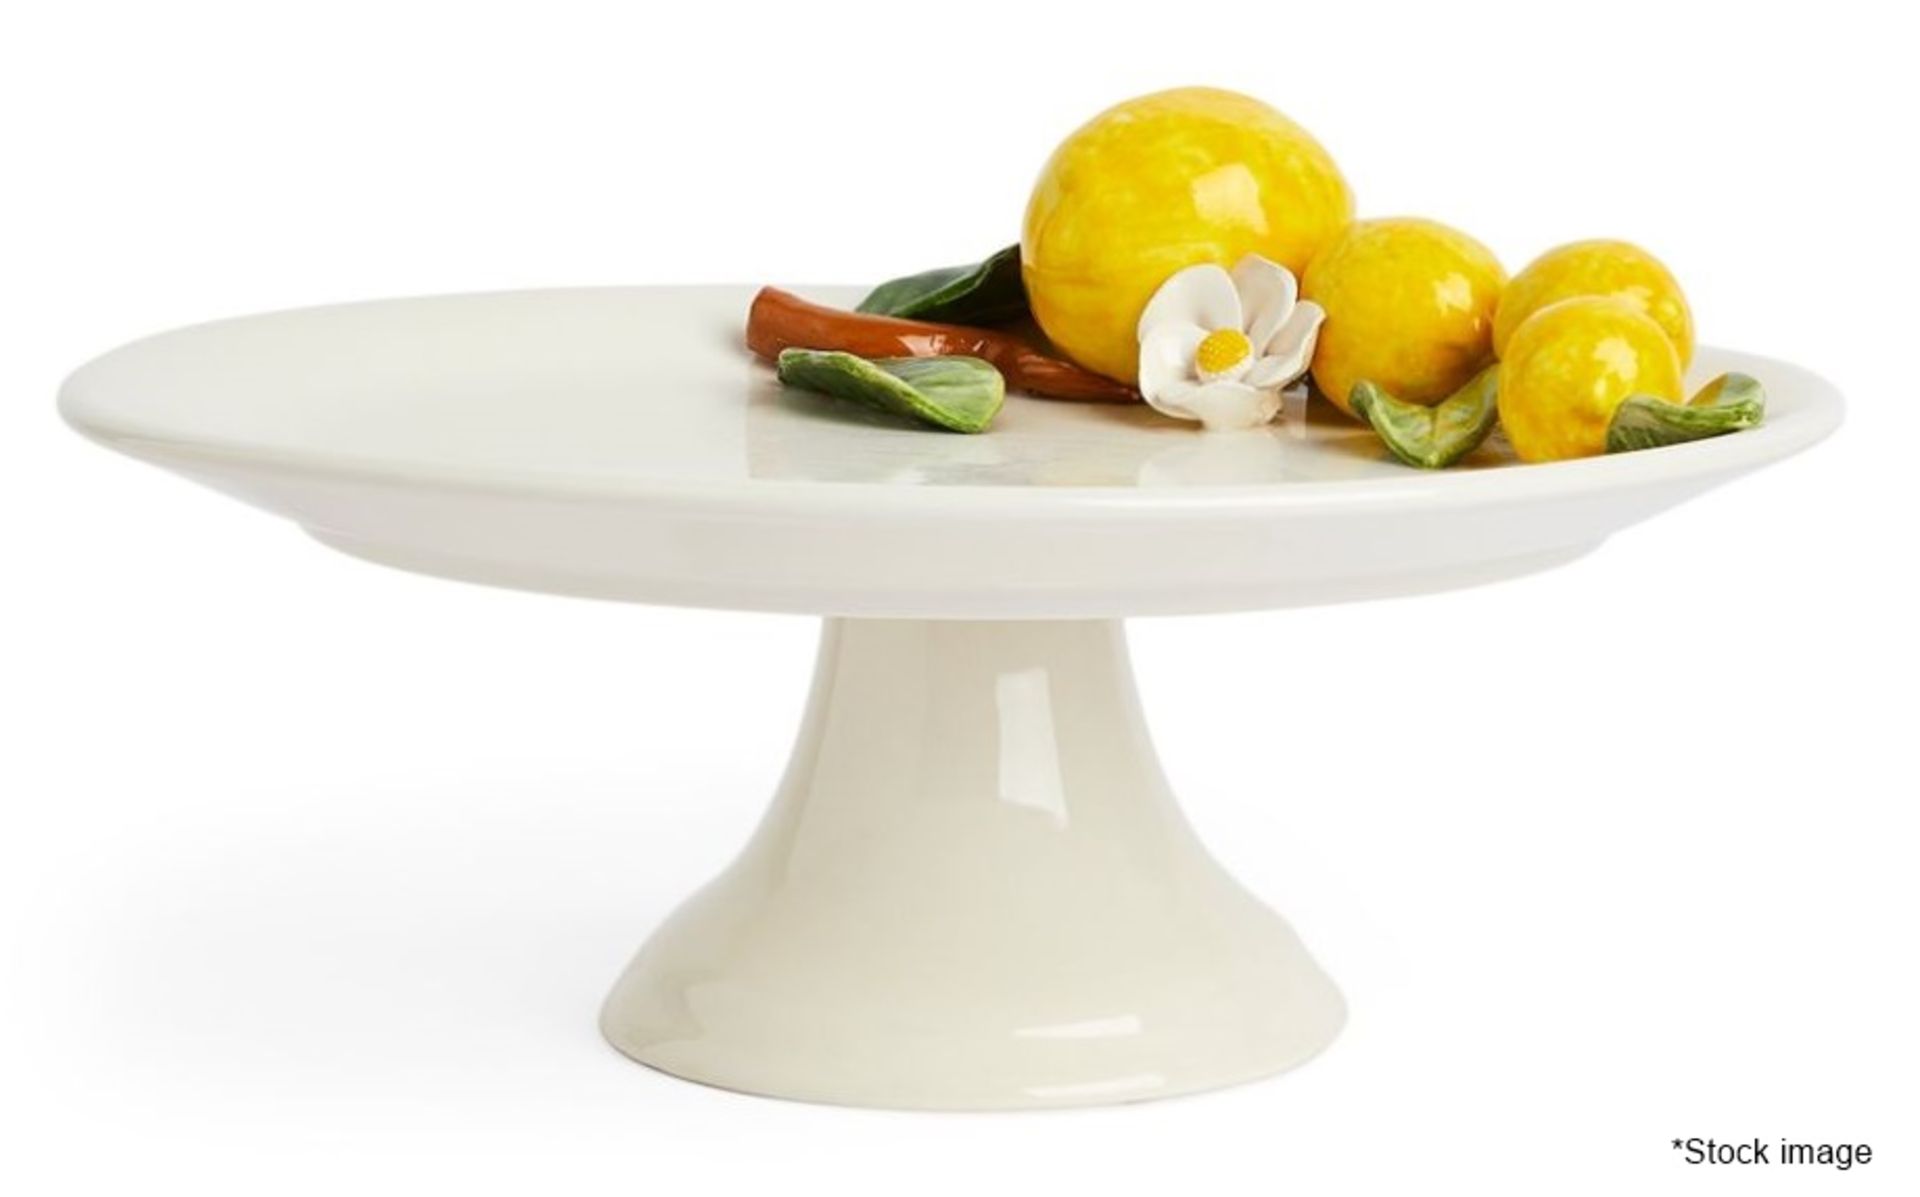 1 x LES-OTTOMANS 'Lemon' Hand-painted Porcelain Cake Stand (15cm) - Original Price £128.00 - Ex- - Image 3 of 14